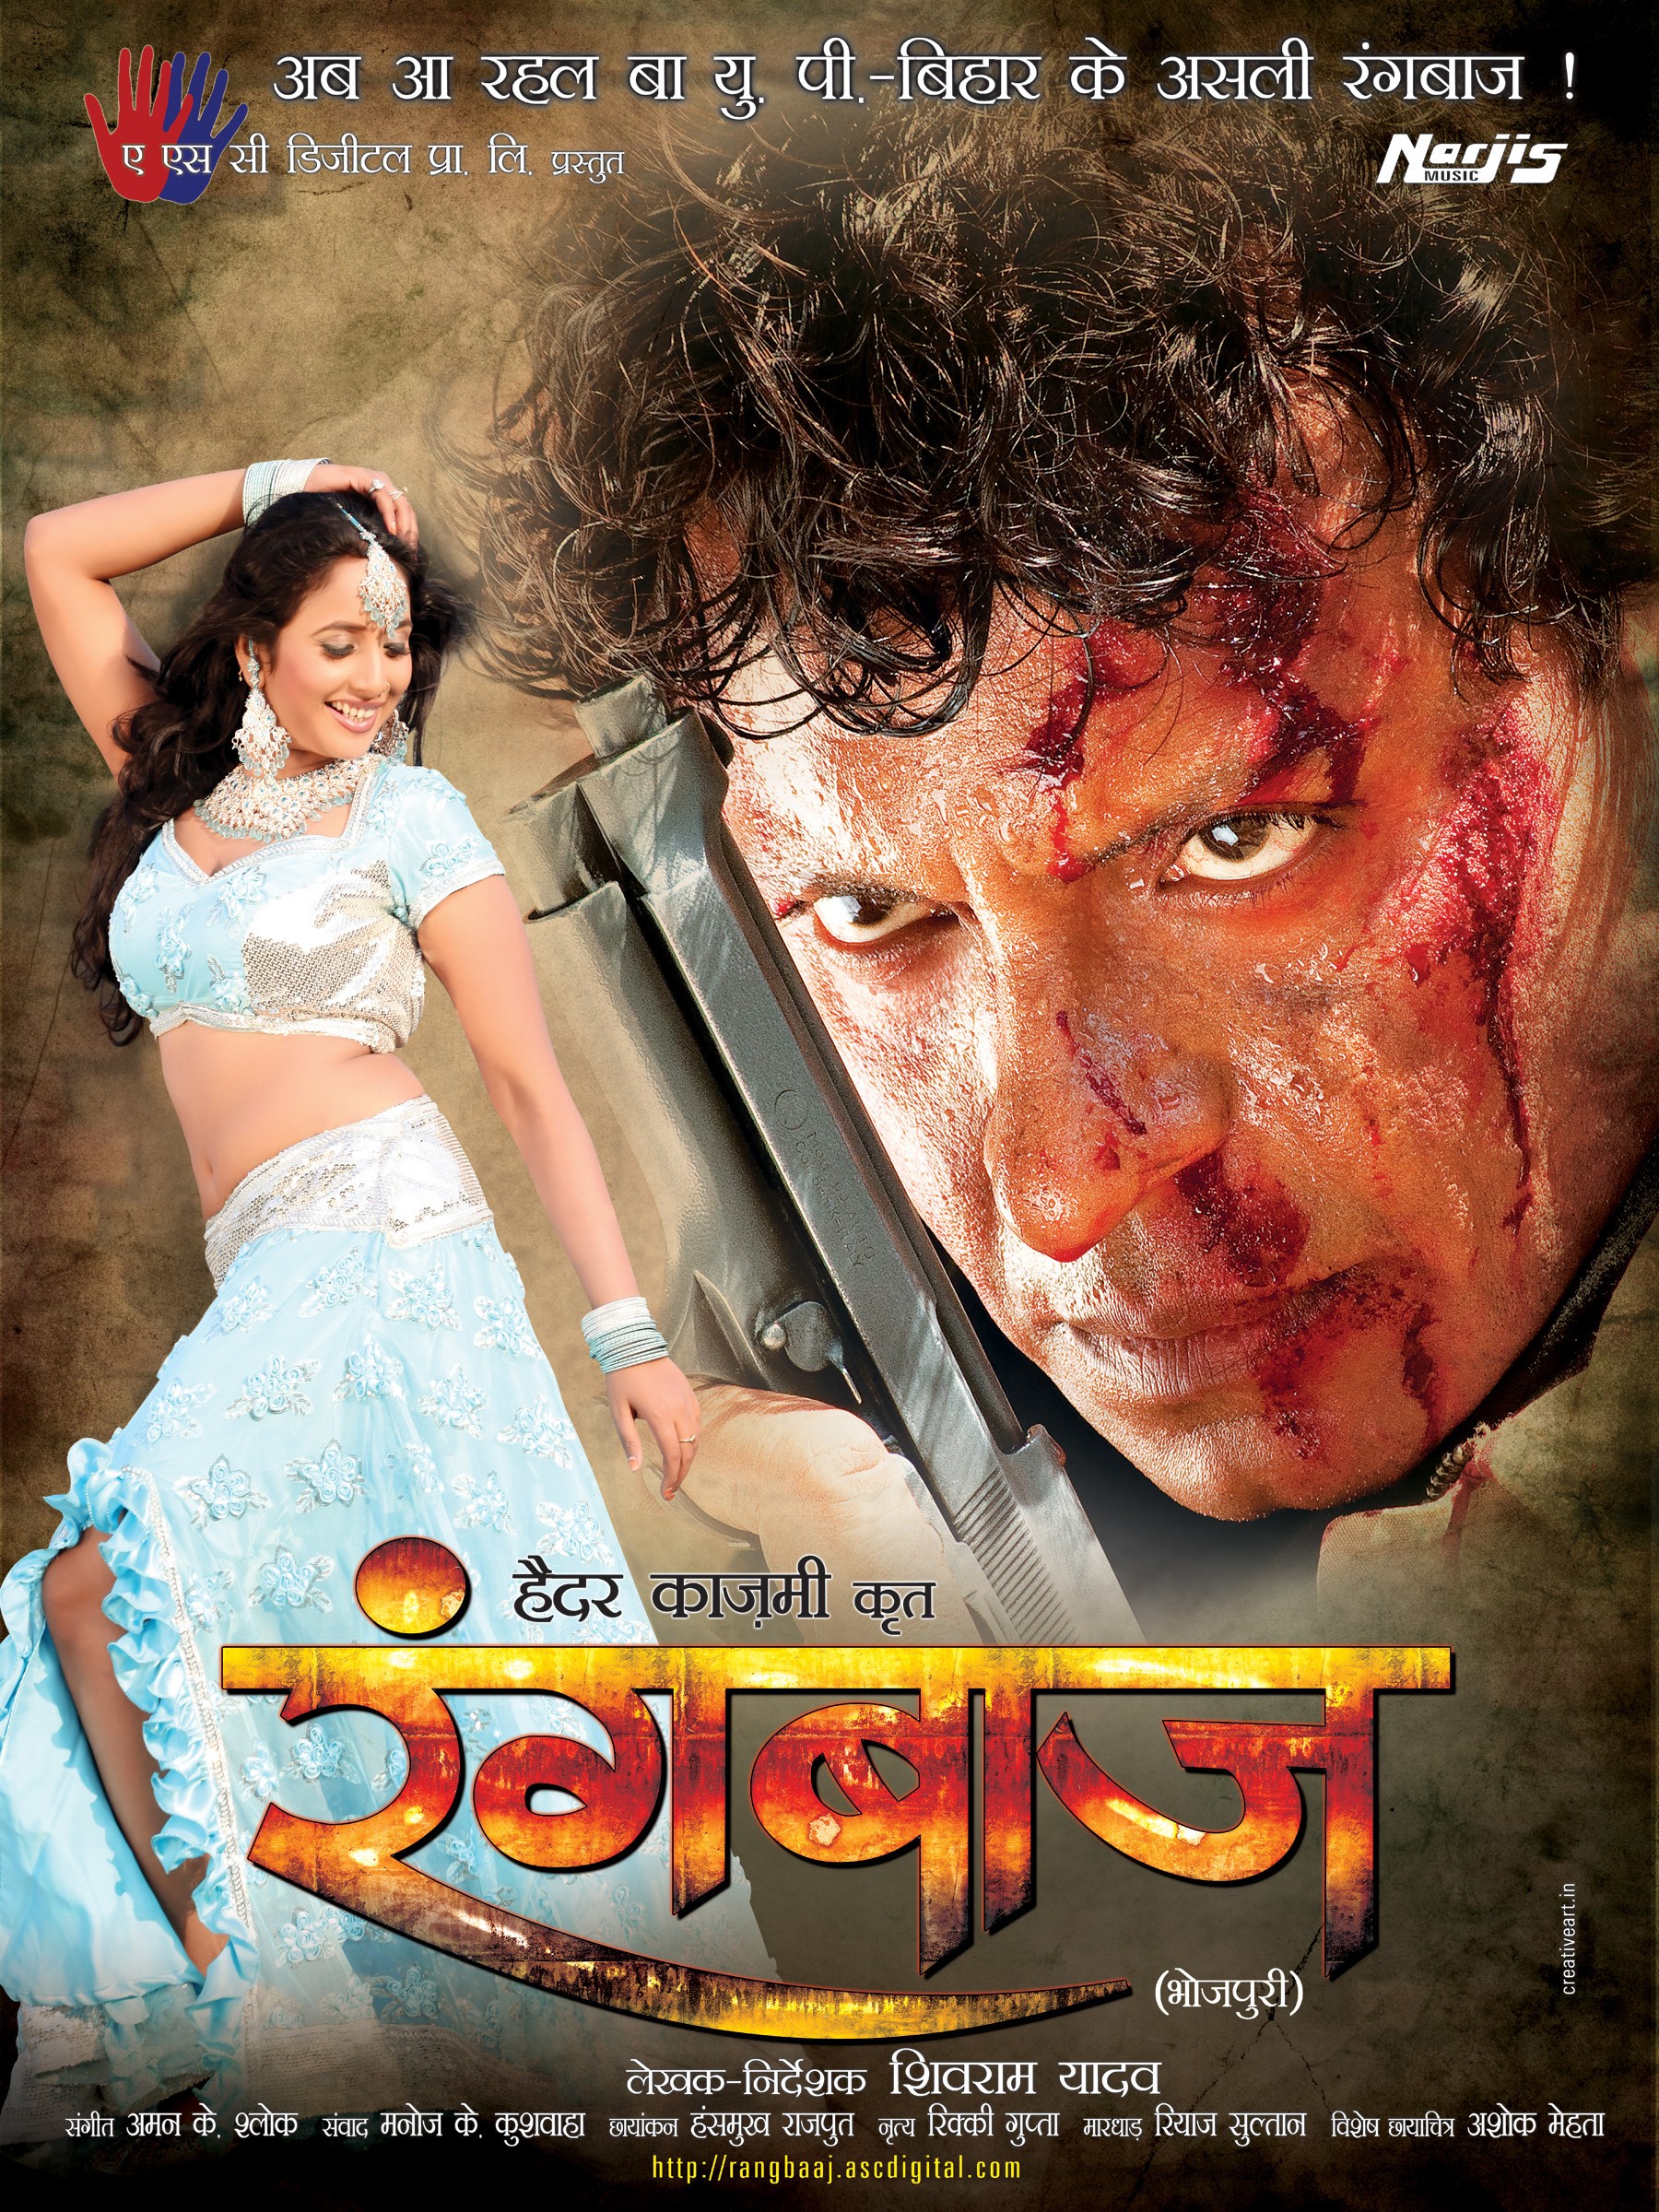 Mega Sized Movie Poster Image for Rangbaaj (#1 of 2)